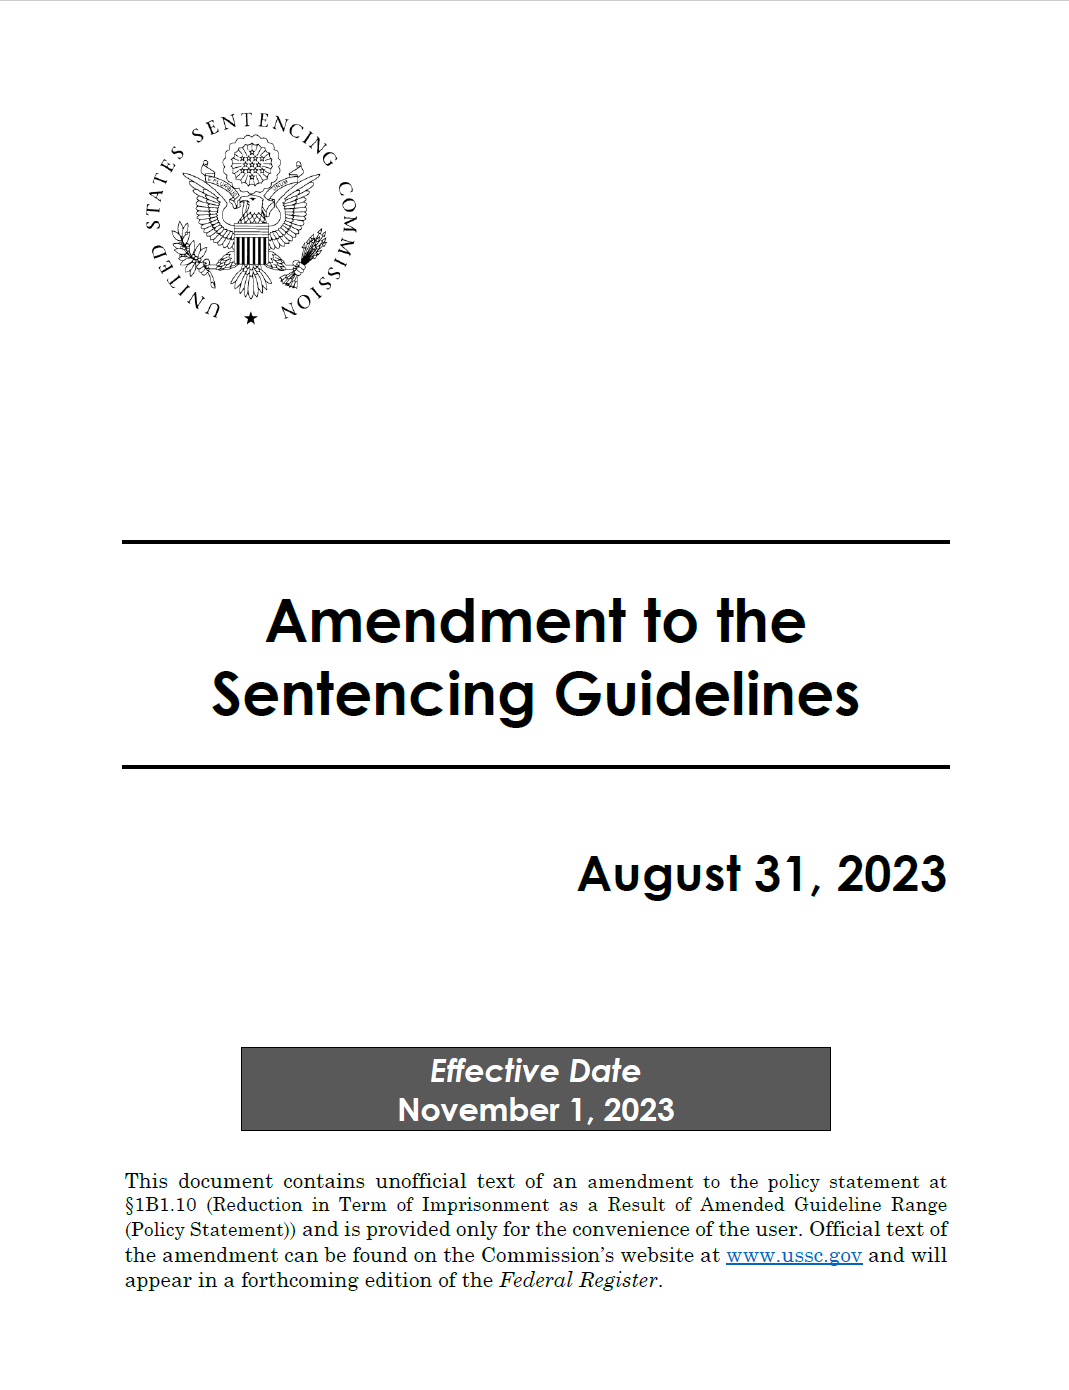 Cover of the Amendments